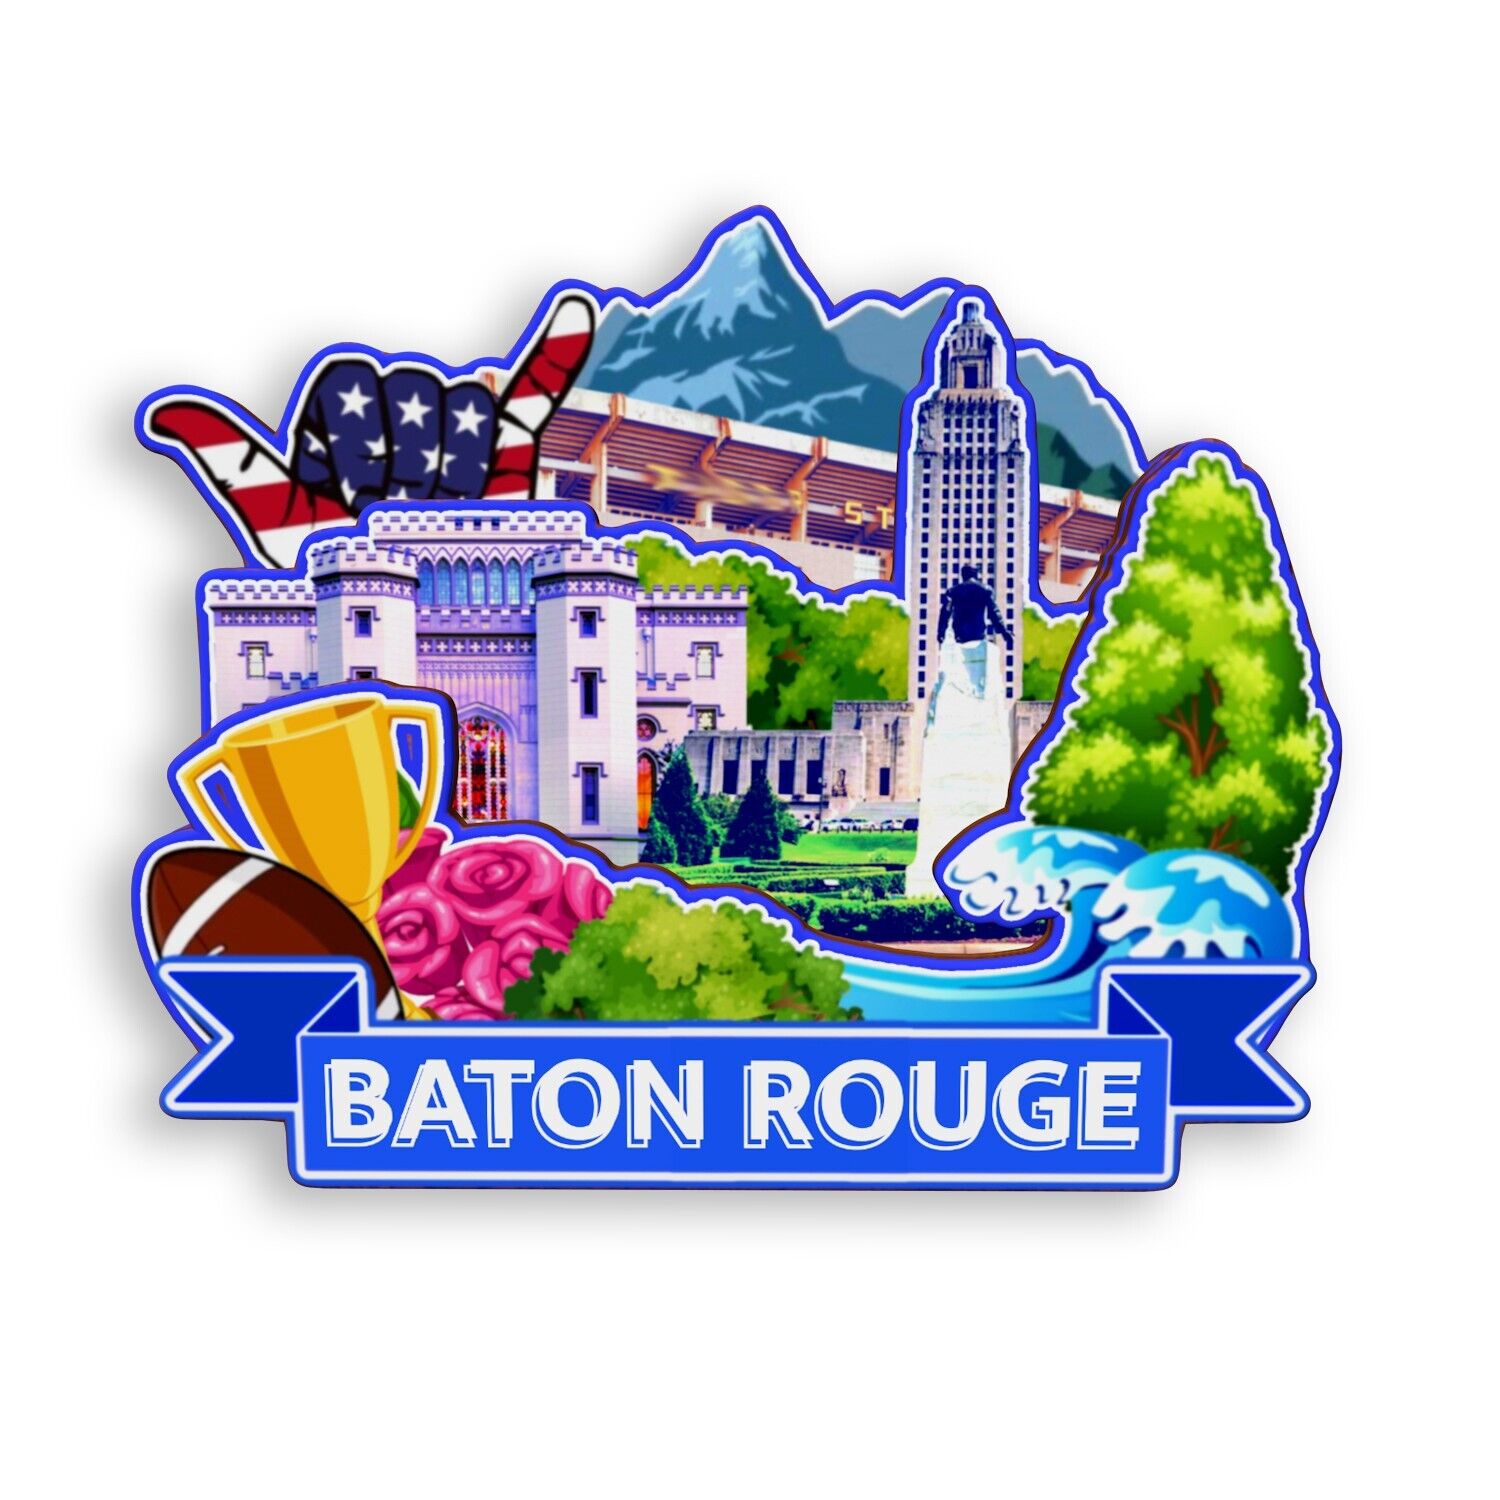 Baton Rouge Louisiana USA Refrigerator magnet 3D travel souvenirs wood gifts